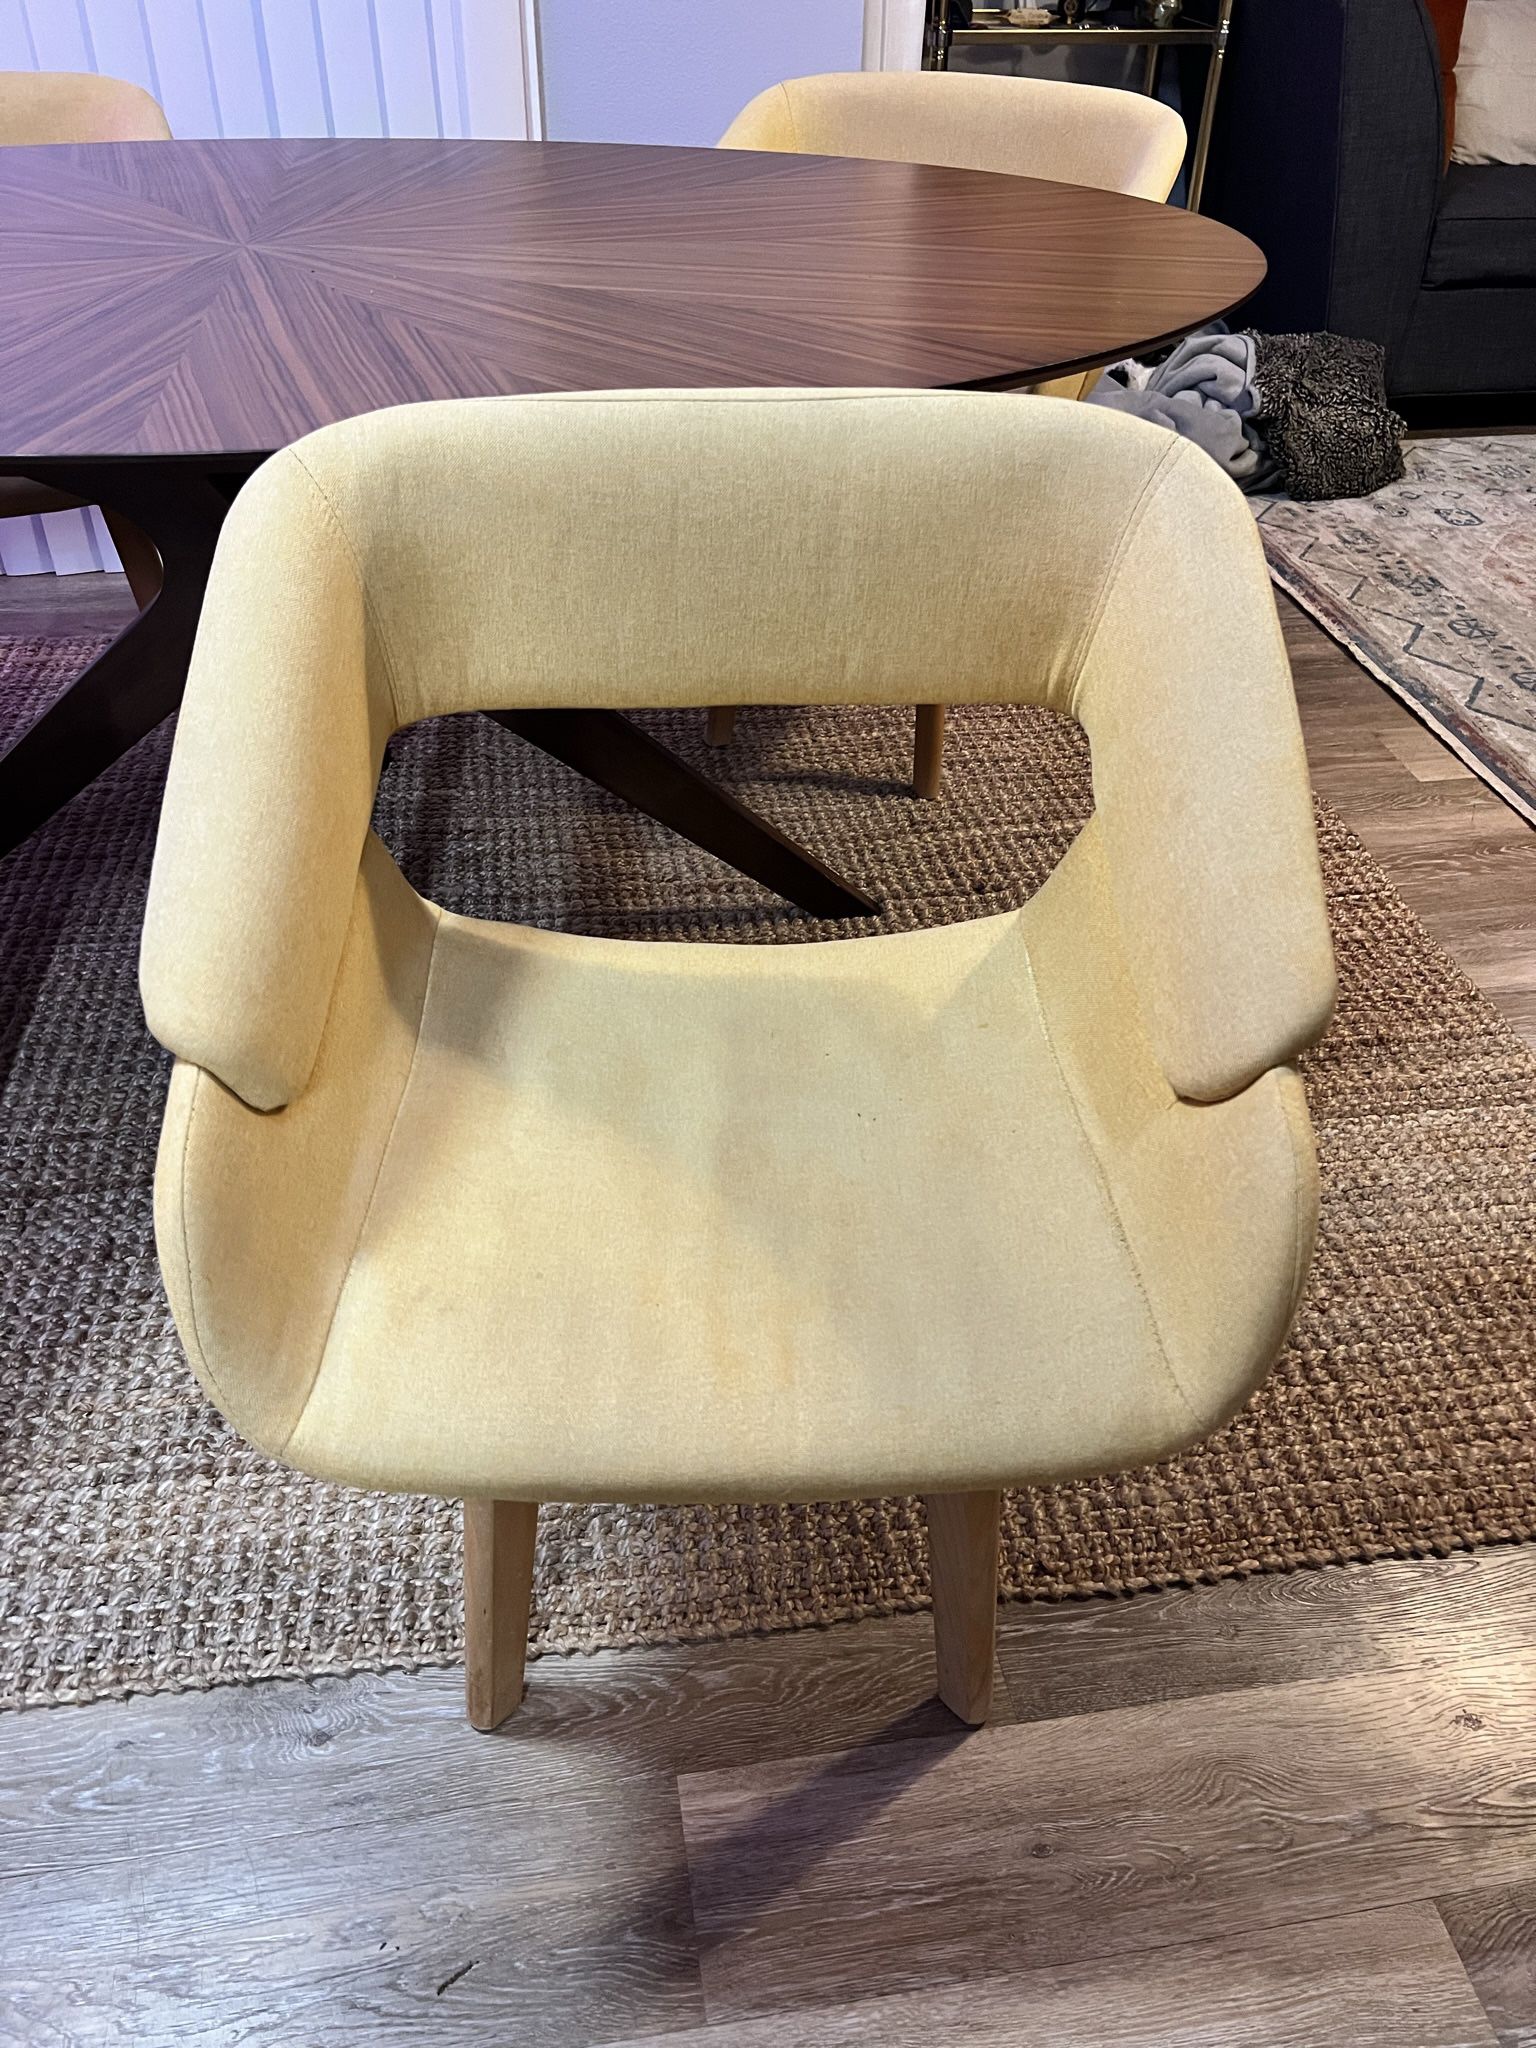 Mid-century Modern Chairs